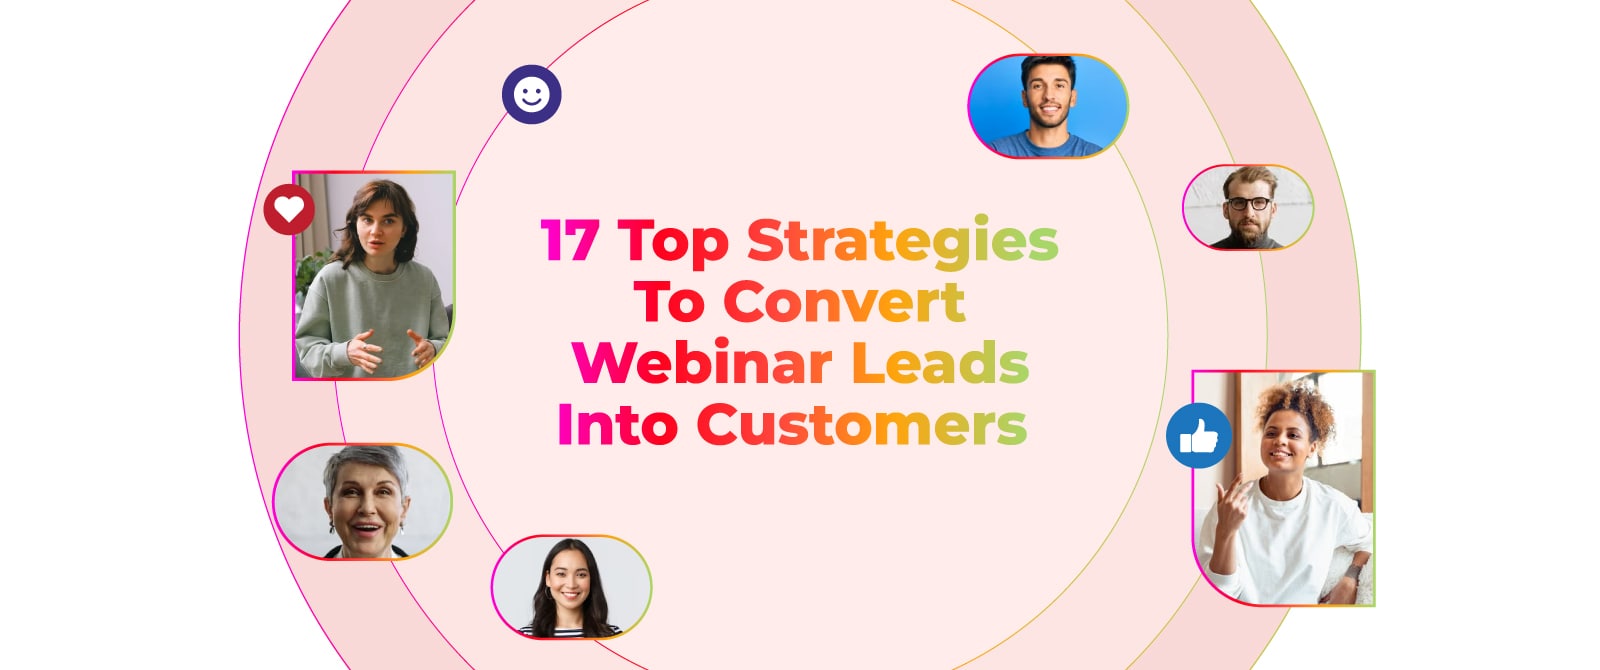 17 Top Strategies to Convert Webinar Leads into Customers